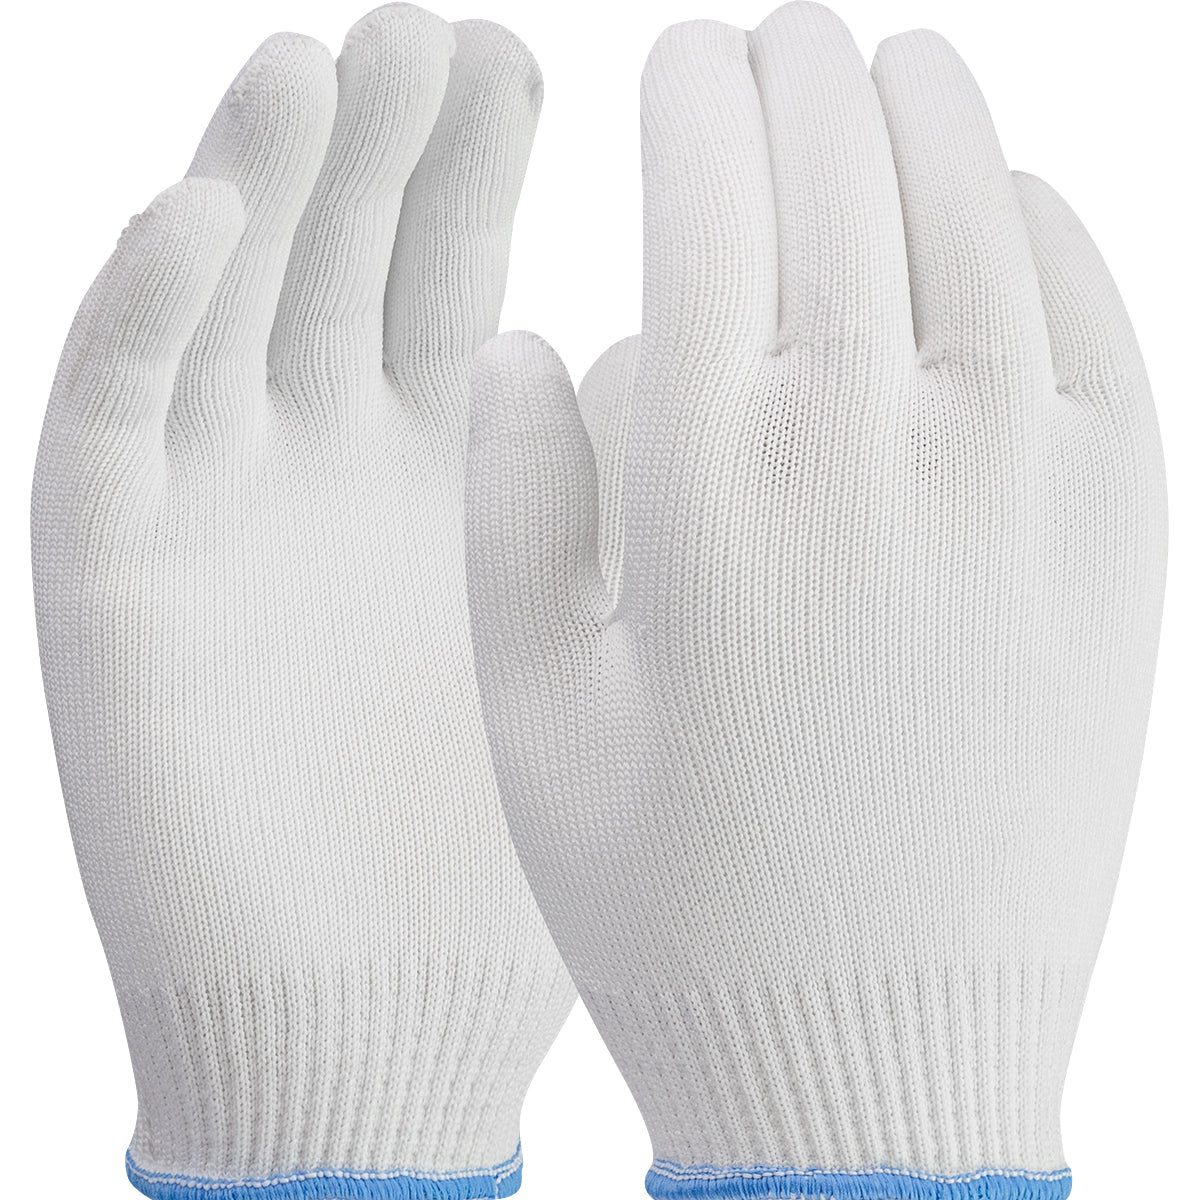 West Chester 713SNL/S Light Weight Seamless Knit Nylon Glove - White